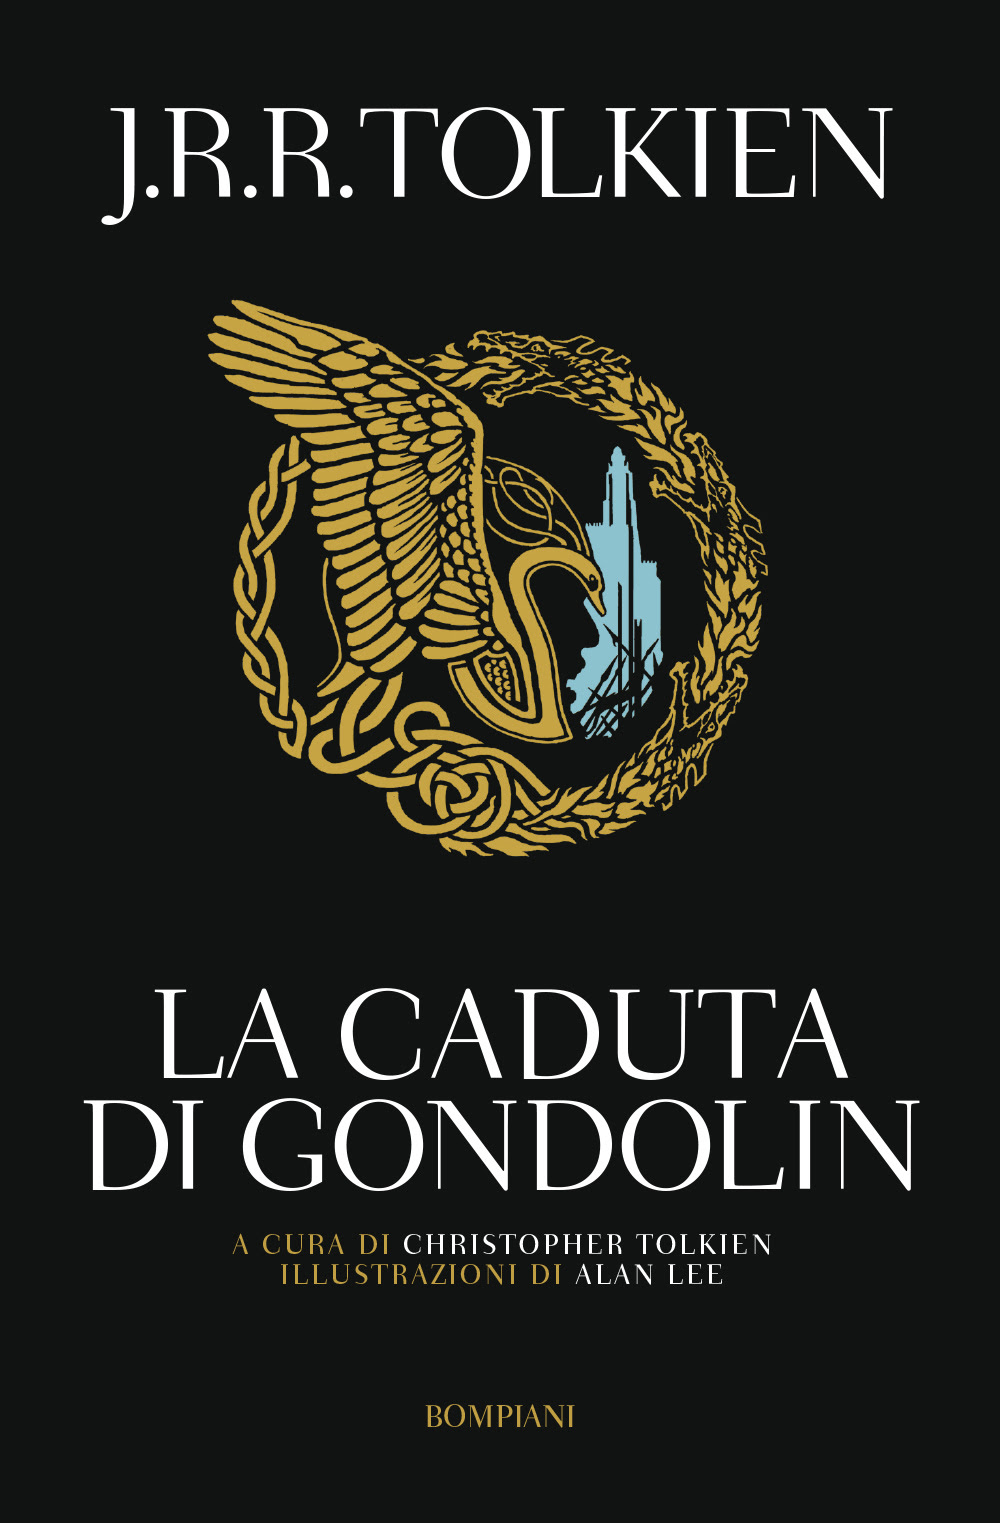 La caduta di Gondolin in Kindle/PDF/EPUB